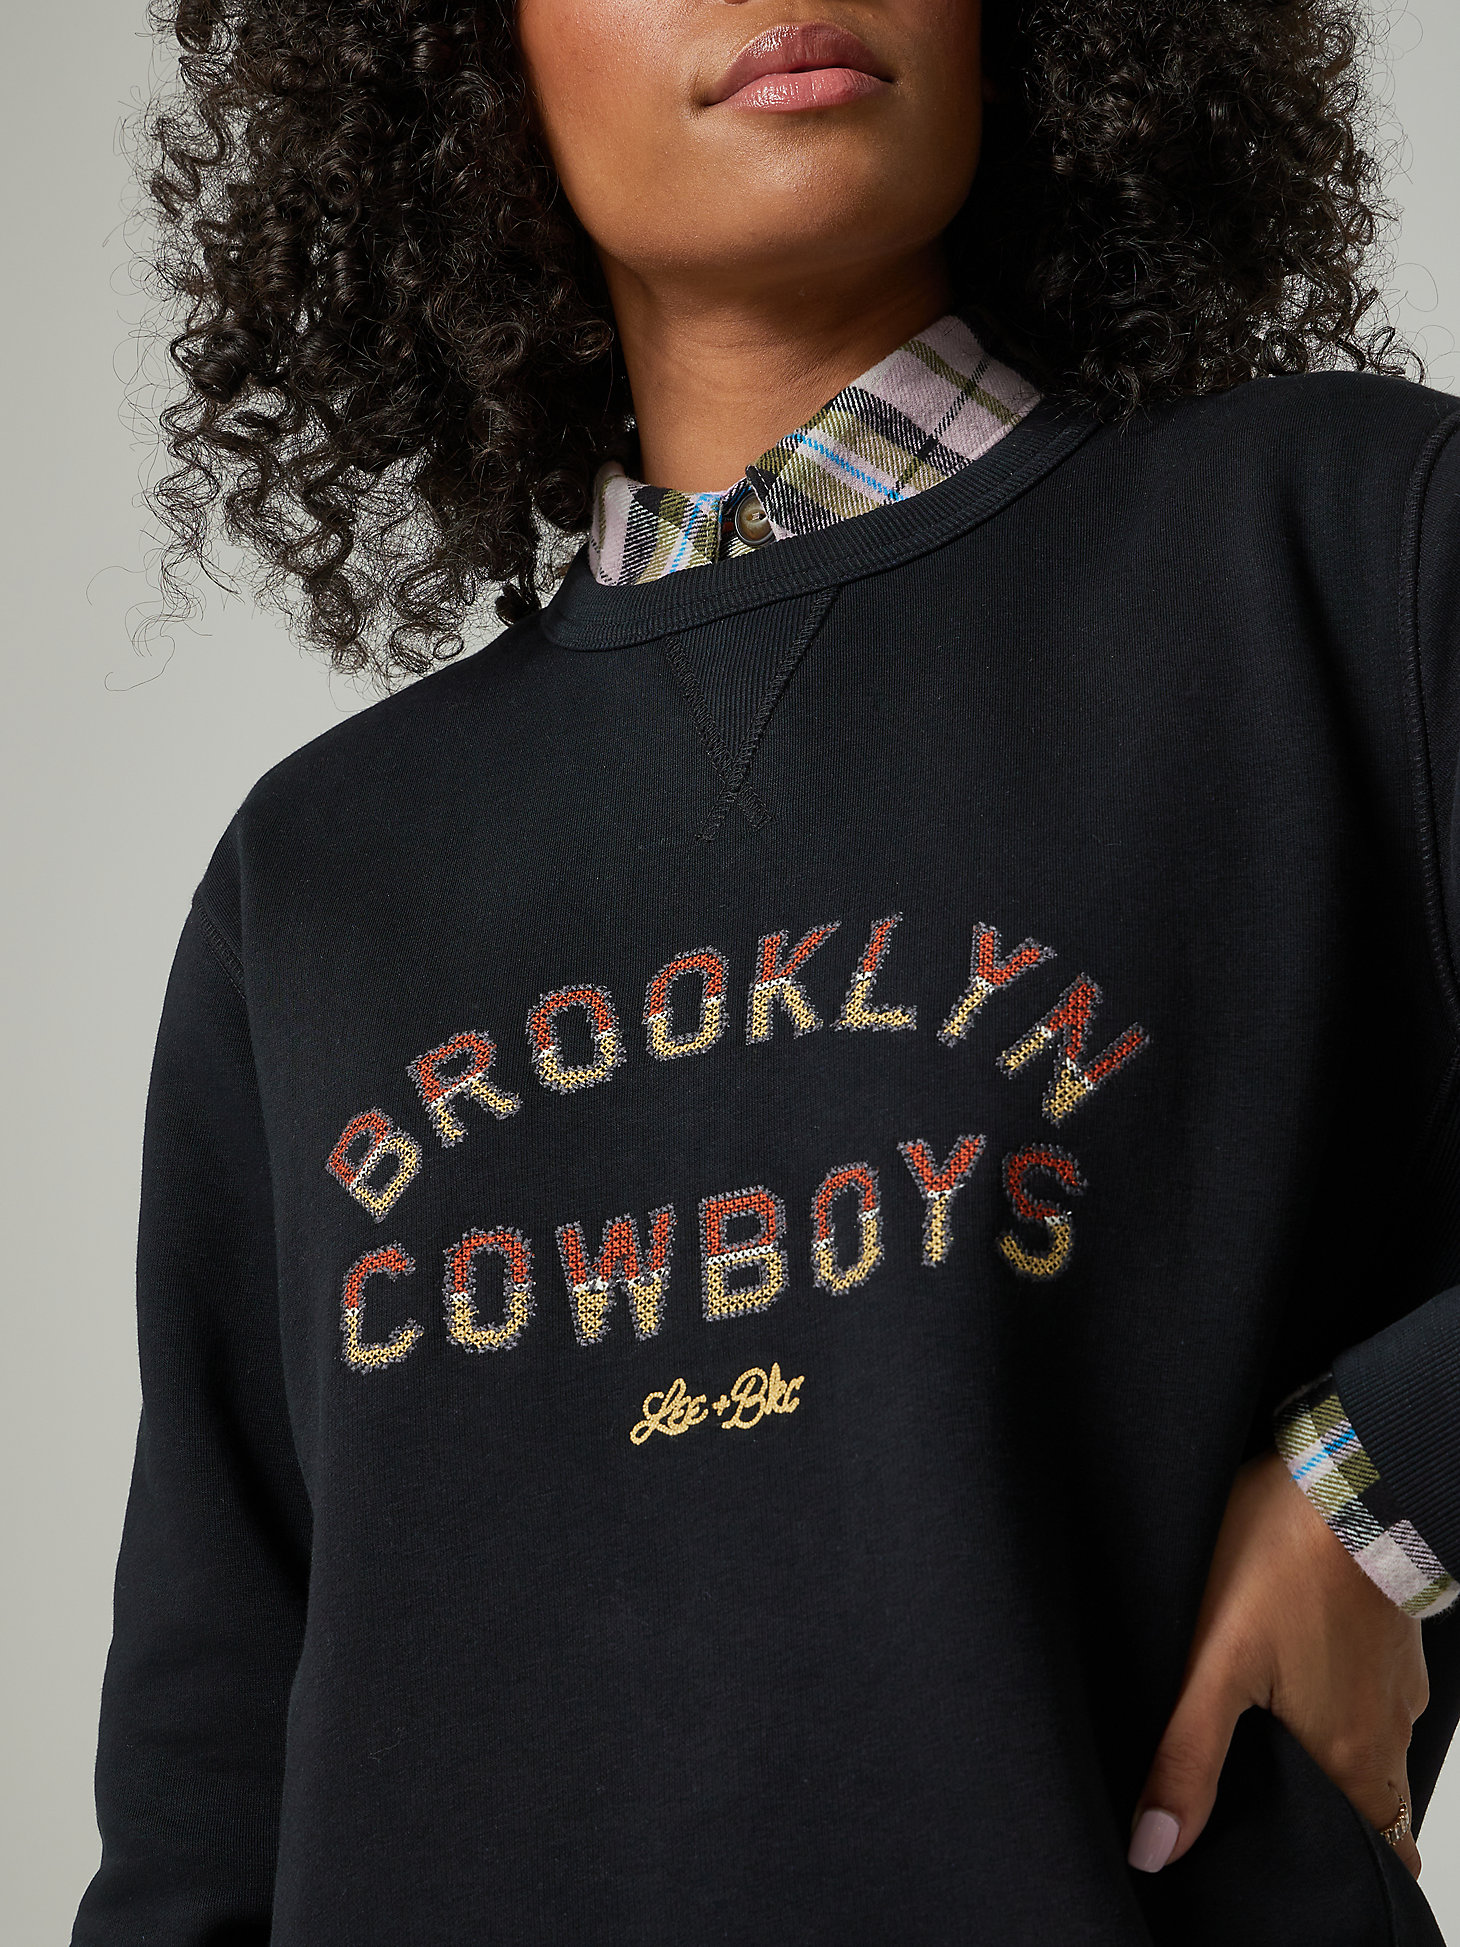 Lee® x The Brooklyn Circus® Cowboys Graphic Sweatshirt in Black alternative view 2